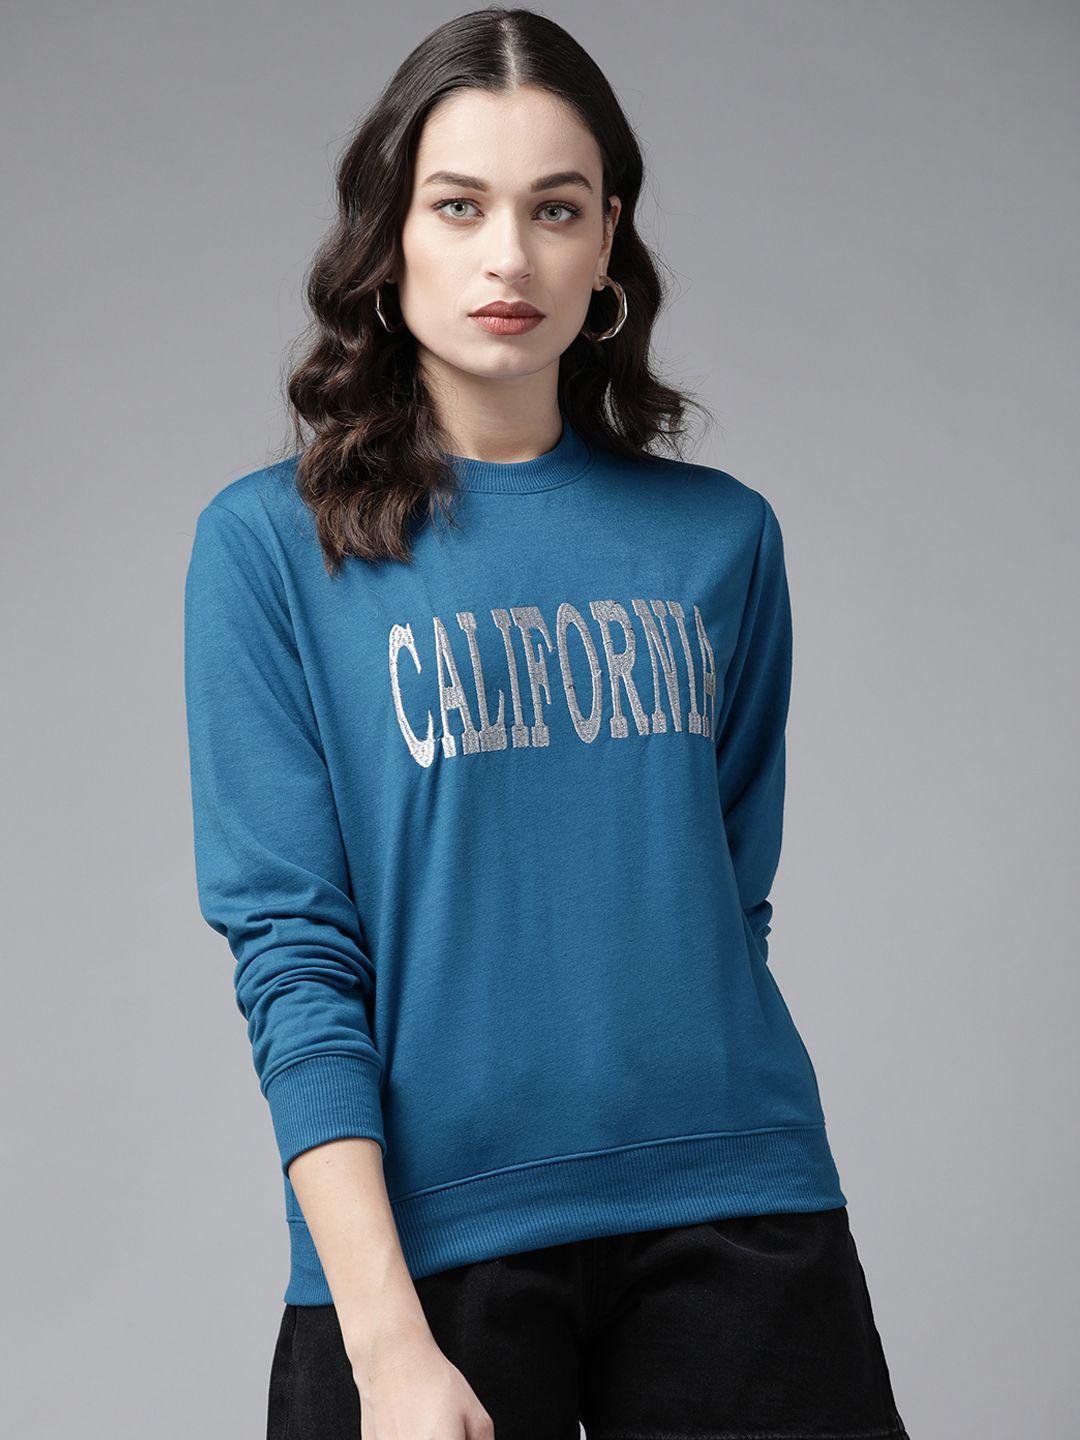 kassually women navy blue & silver embroidered sweatshirt